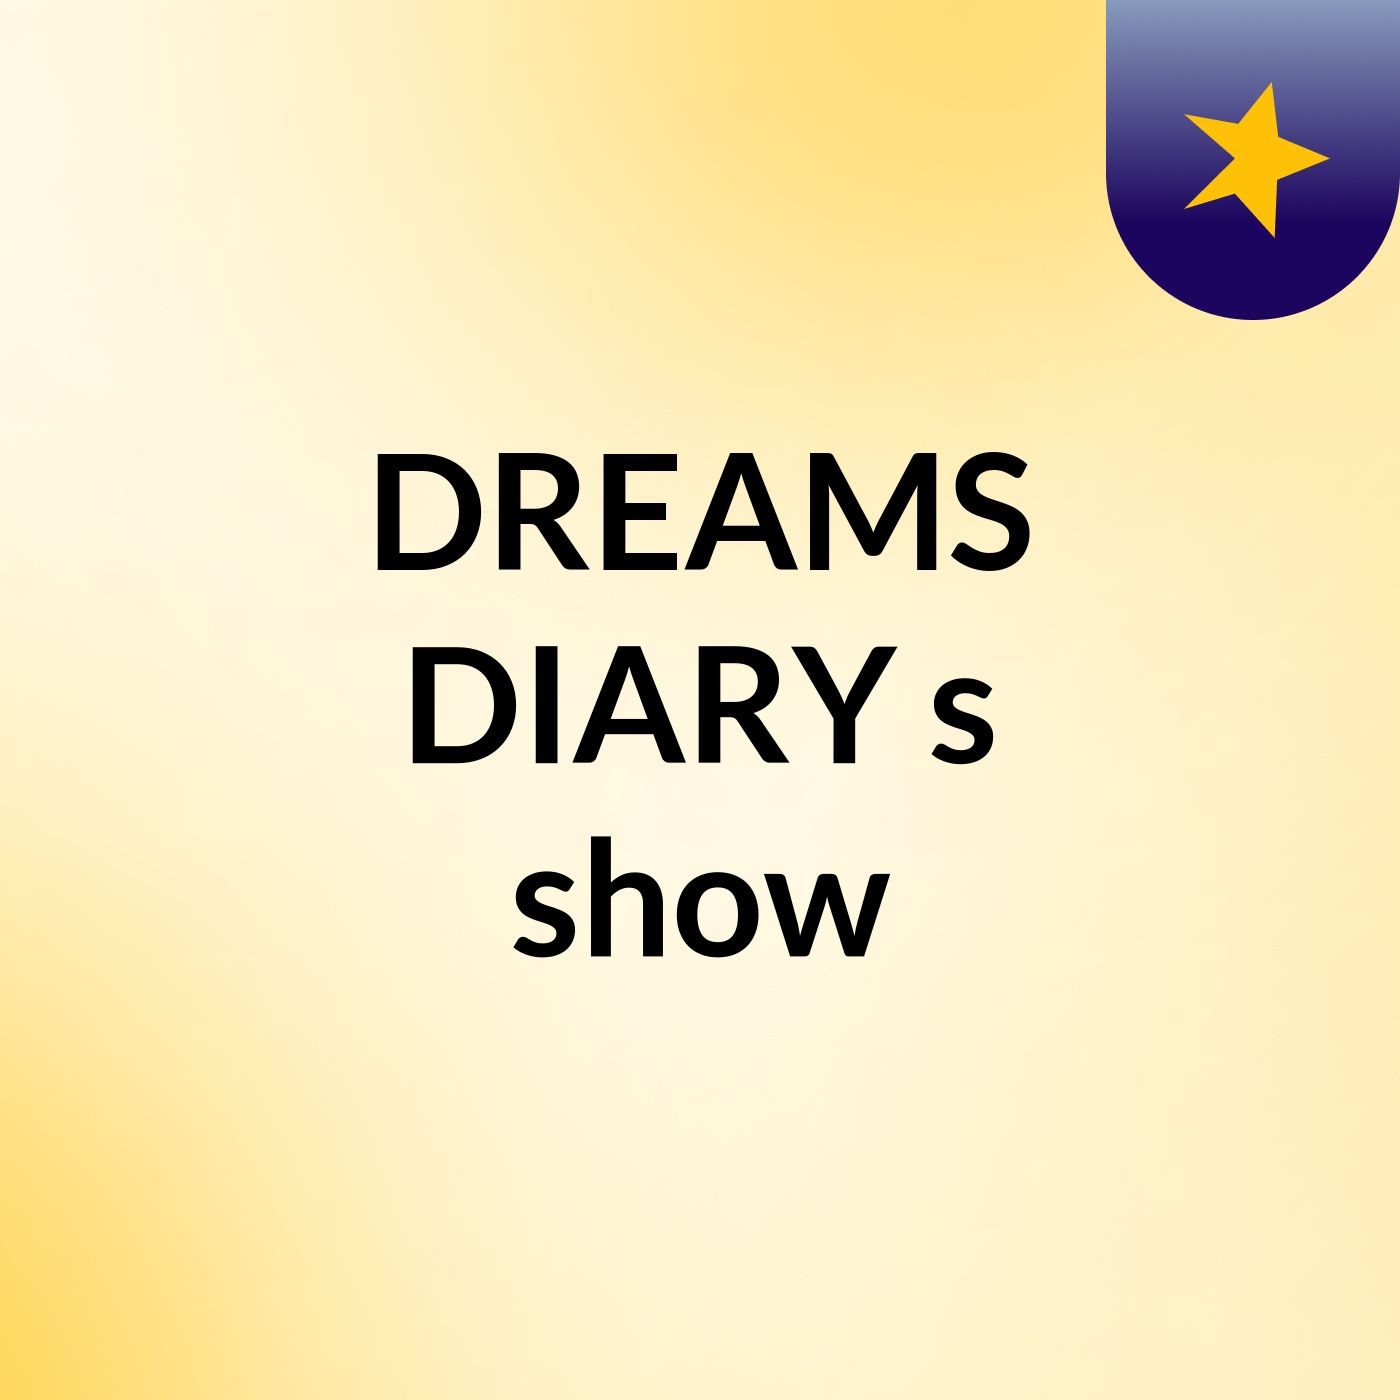 DREAMS DIARY's show